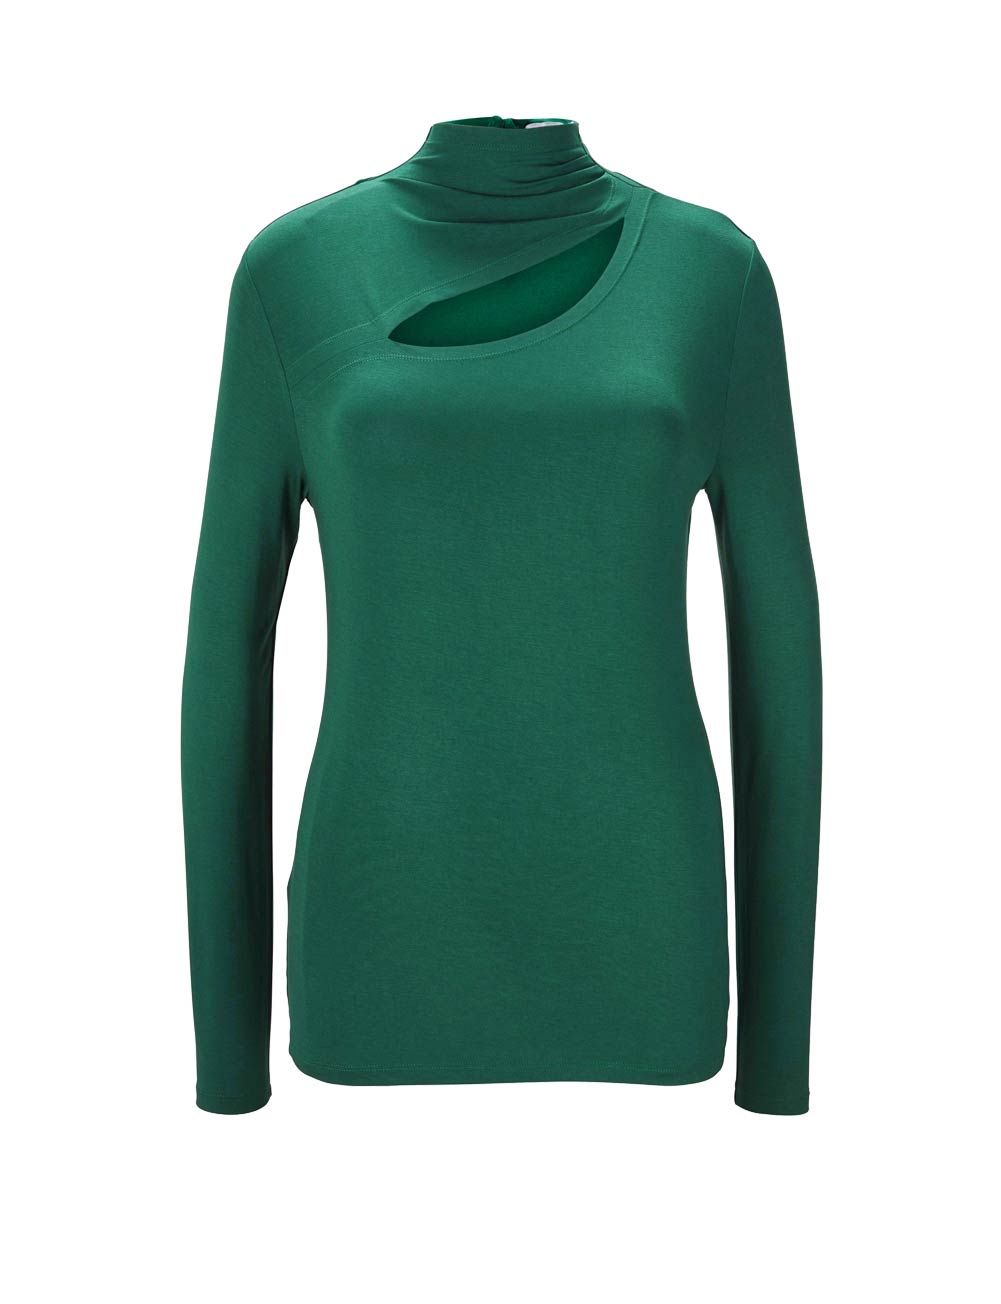 ASHLEY BROOKE Damen Designer-Jerseyshirt mit Cut-Out, grün